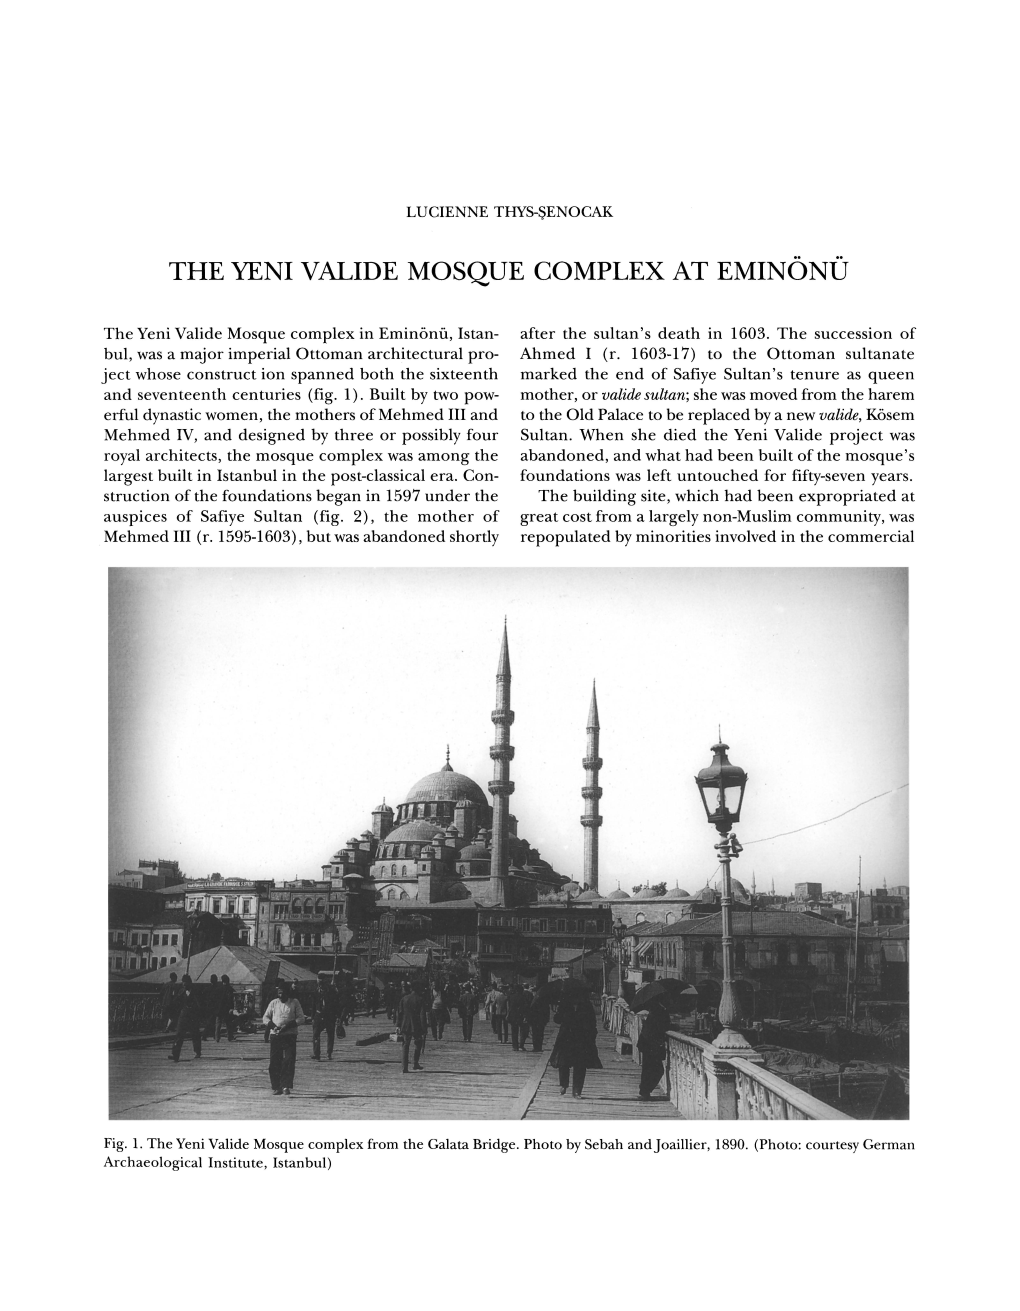 The Yeni Valide Mosque Complex at Eminonu